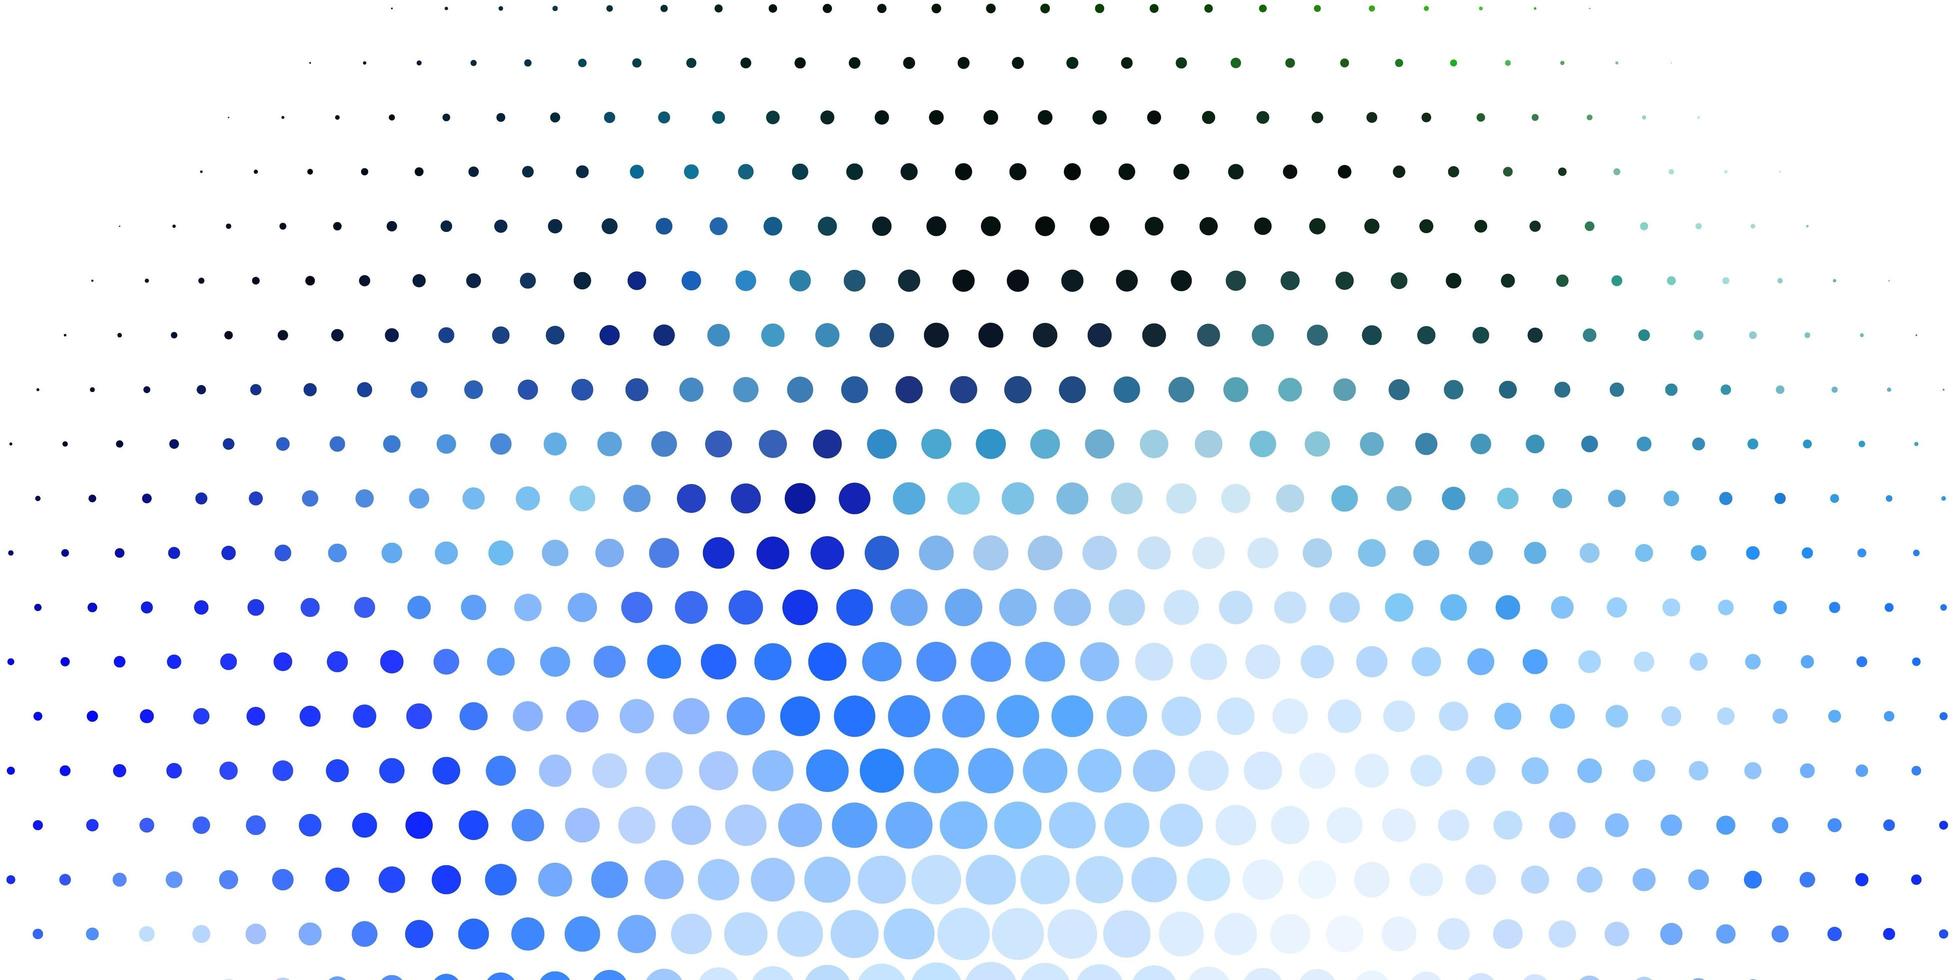 Fondo de vector azul claro, verde con burbujas. Ilustración colorida con puntos degradados en estilo natural. patrón para fondos de pantalla, cortinas.